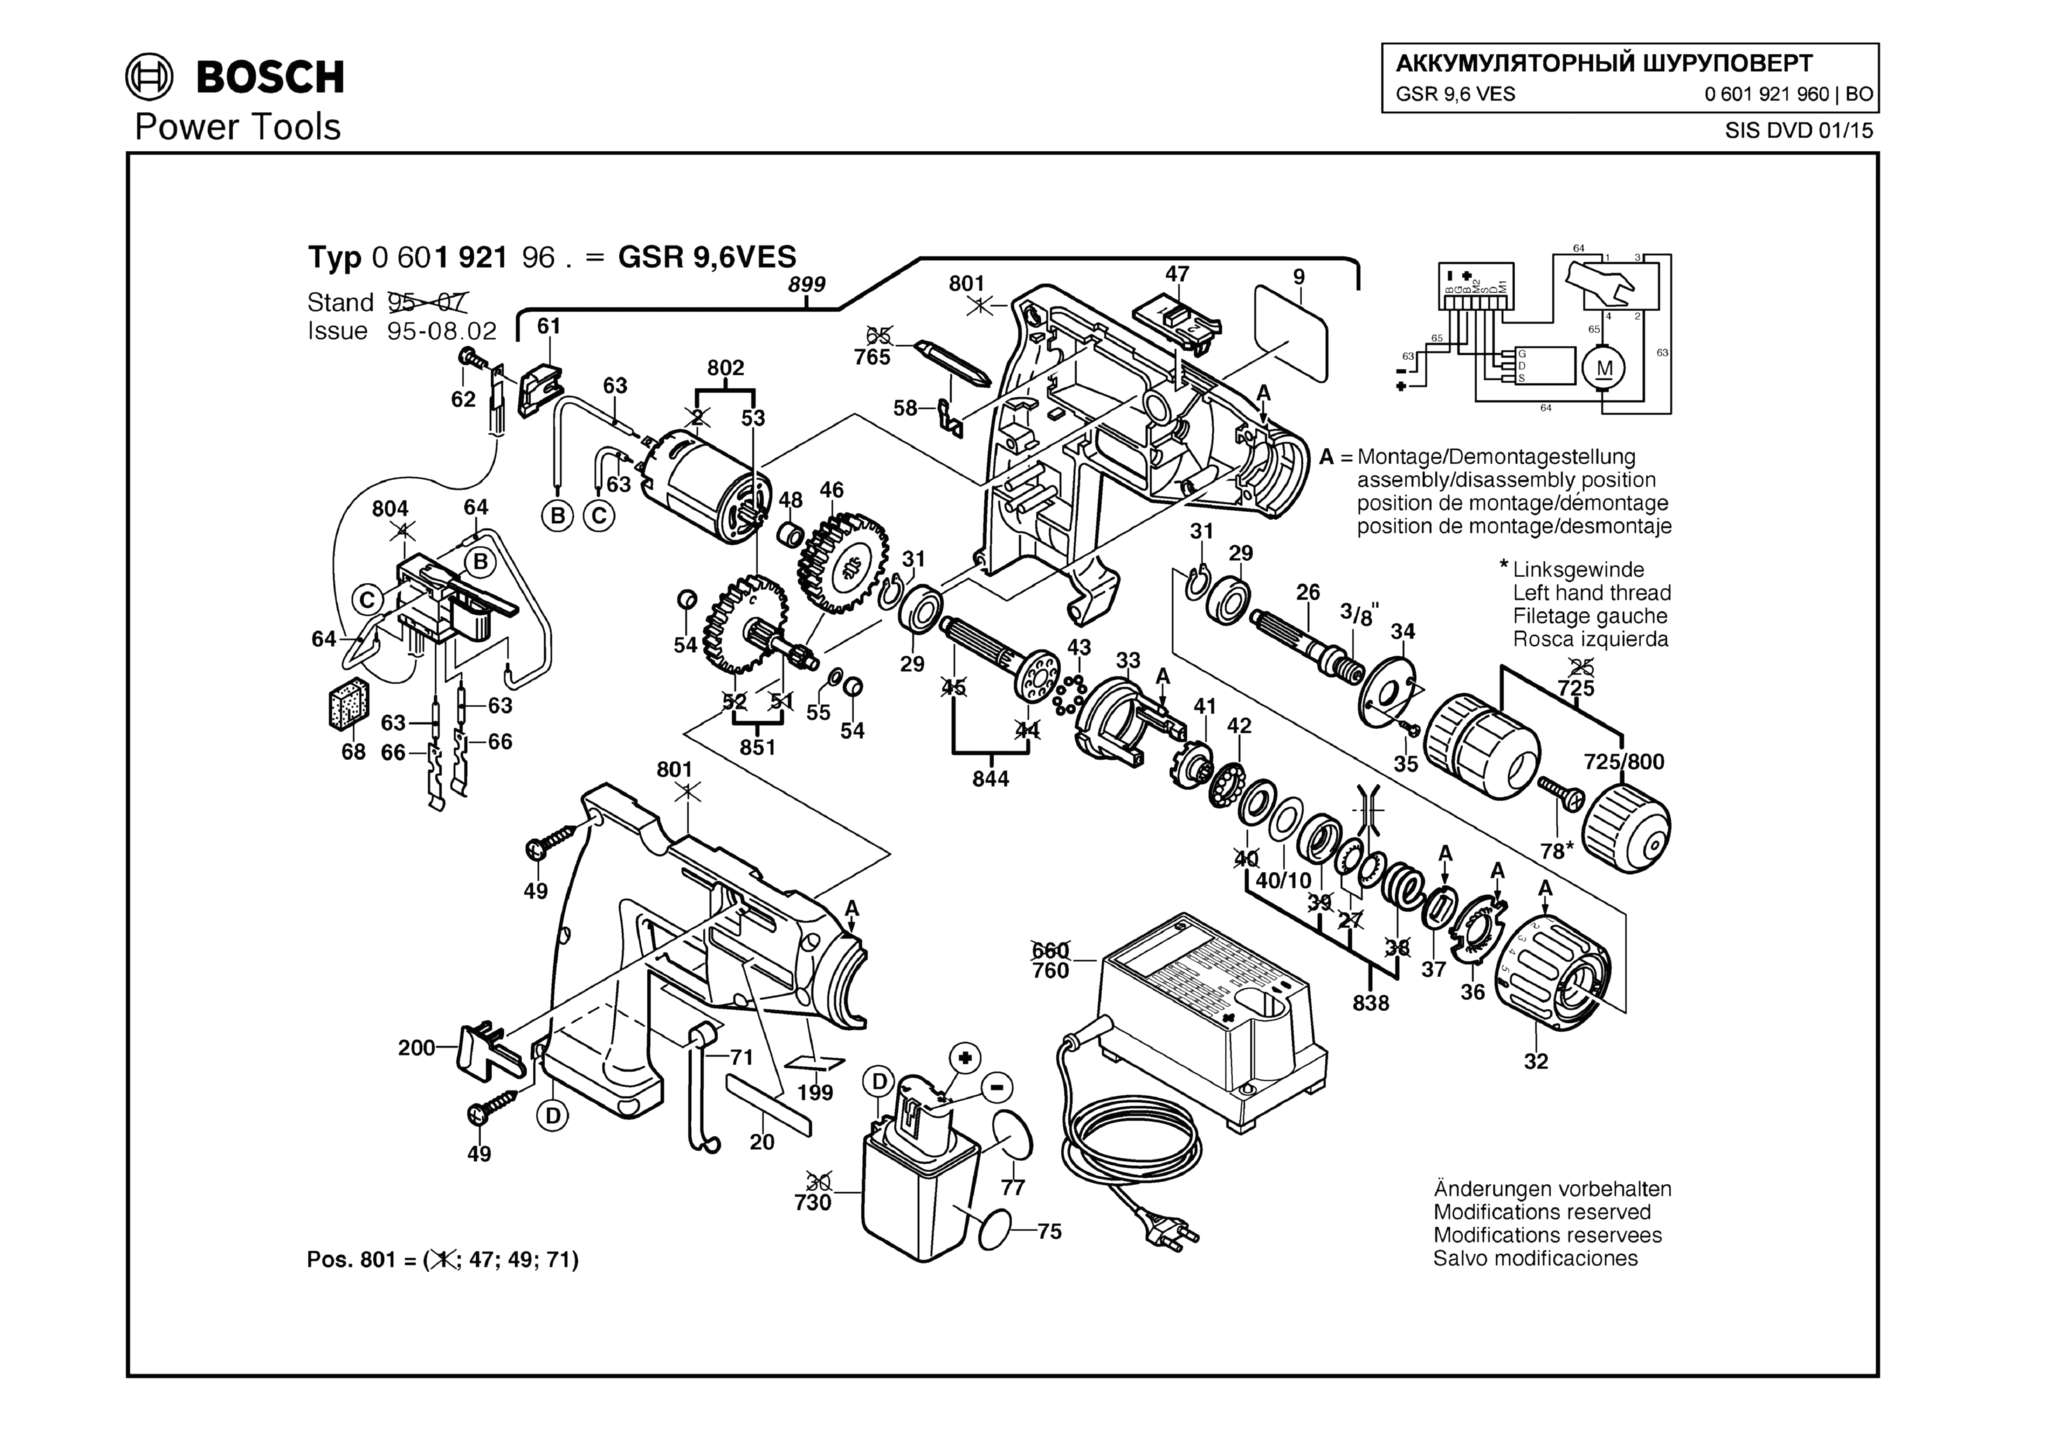 Запчасти, схема и деталировка Bosch GSR 9,6 VES (ТИП 0601921960)